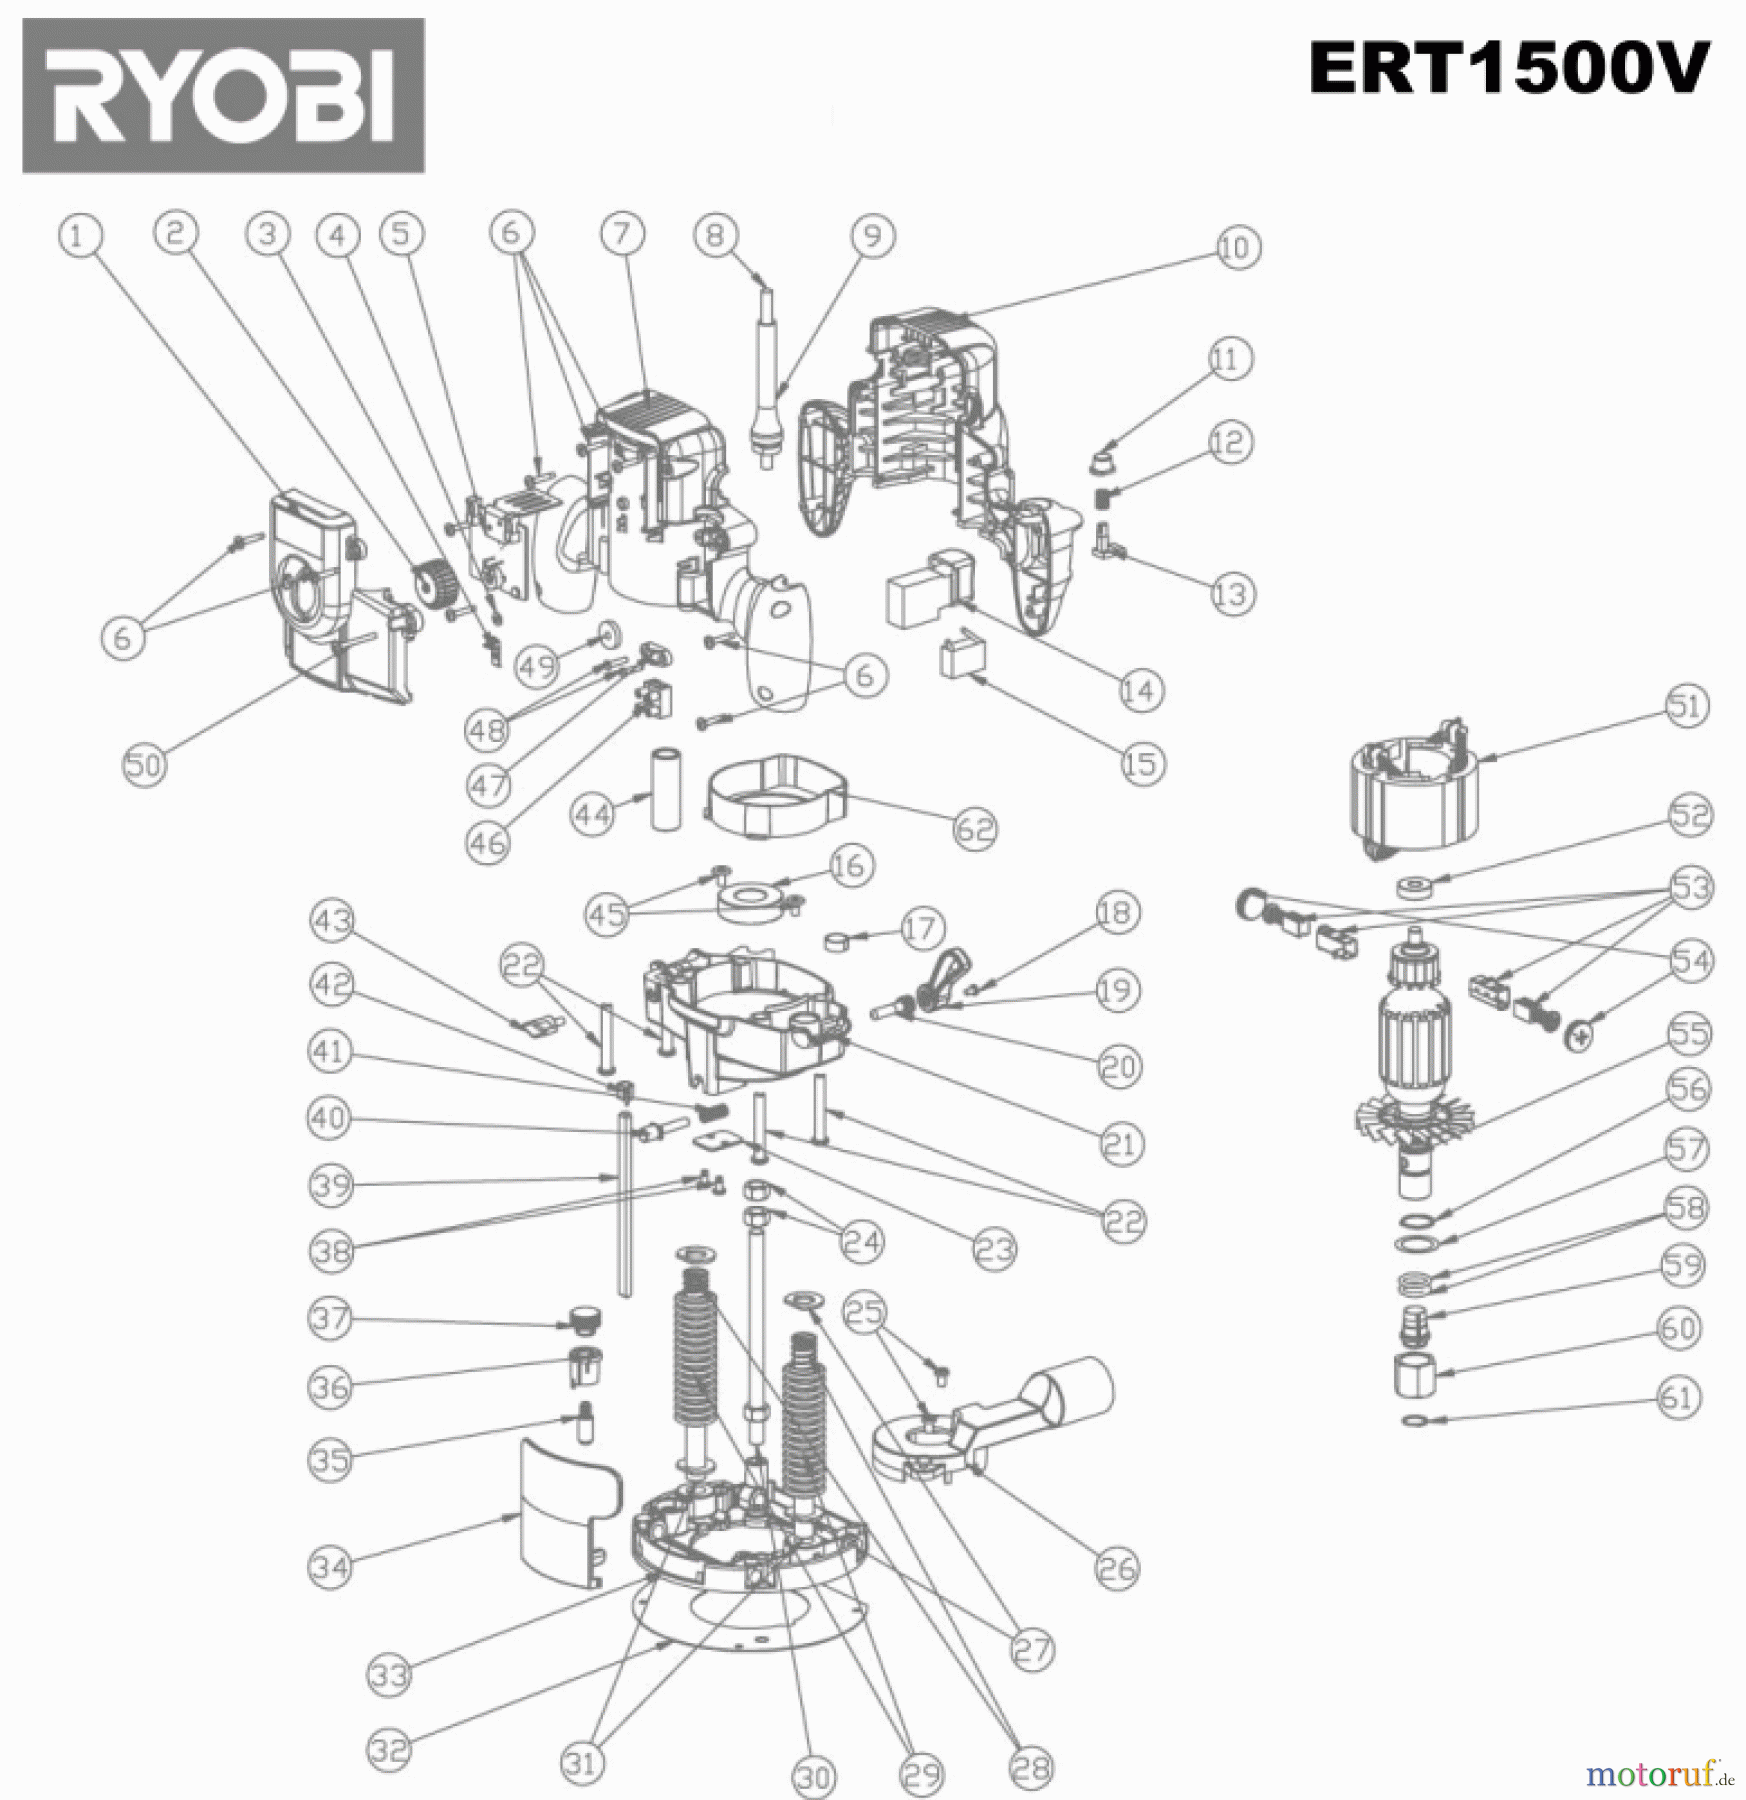  Ryobi Oberfräsen ERT1500V Seite 1